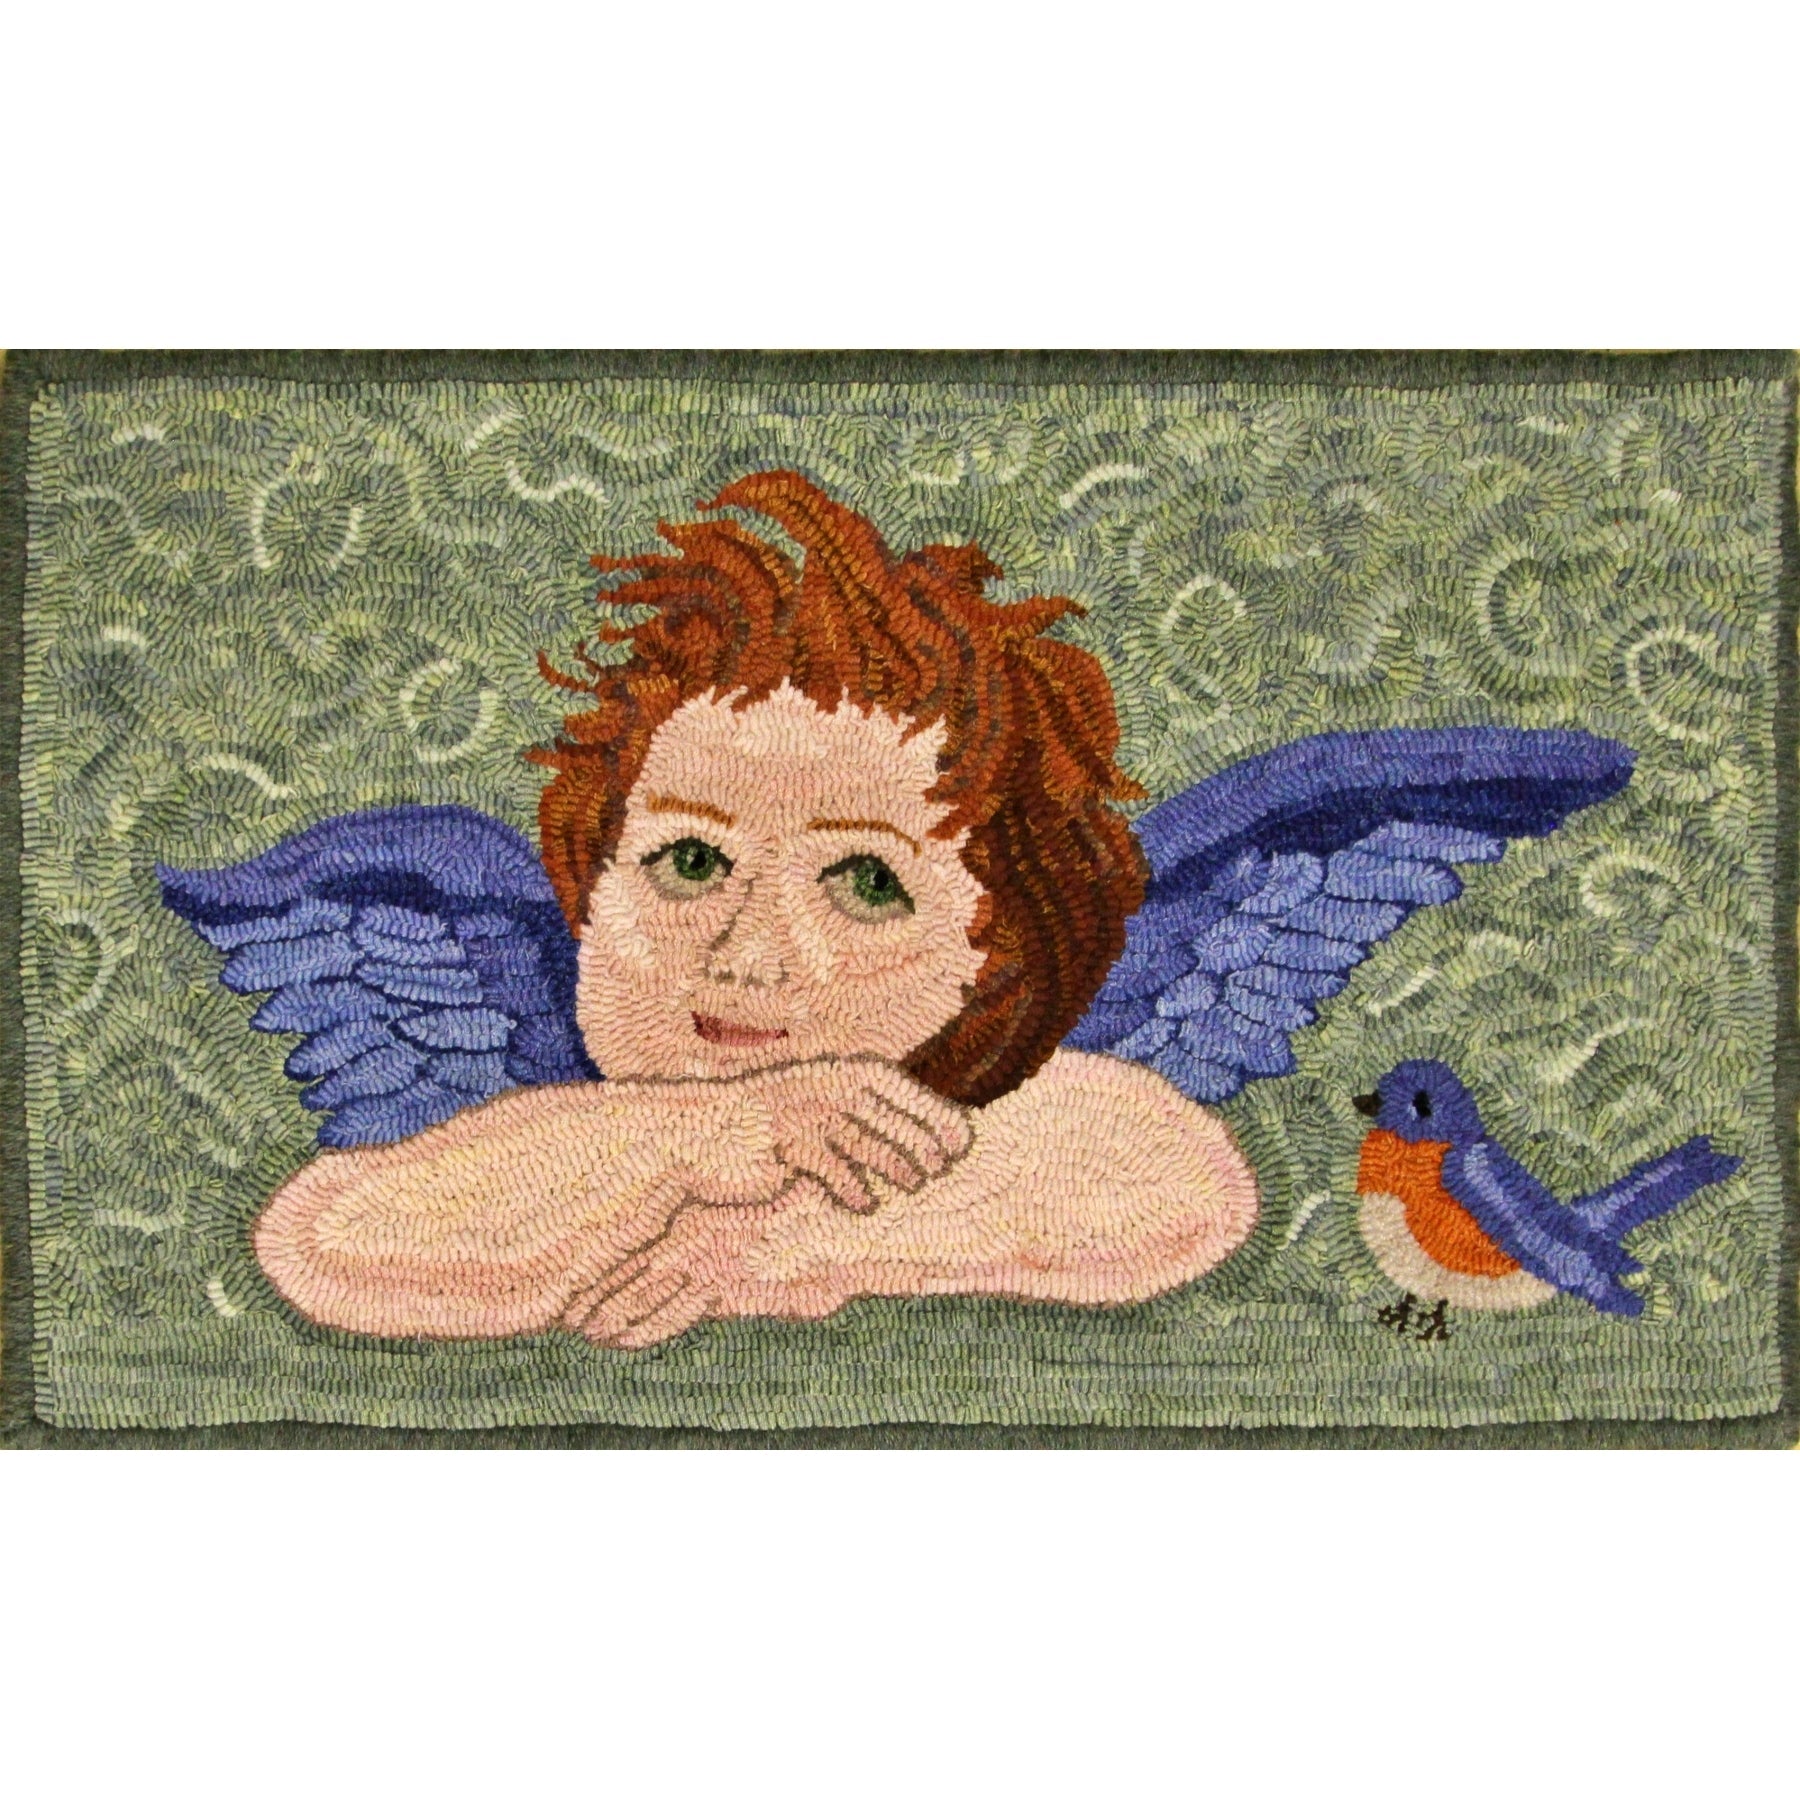 Raphael's Angel, rug hooked by Margaret Oconnor